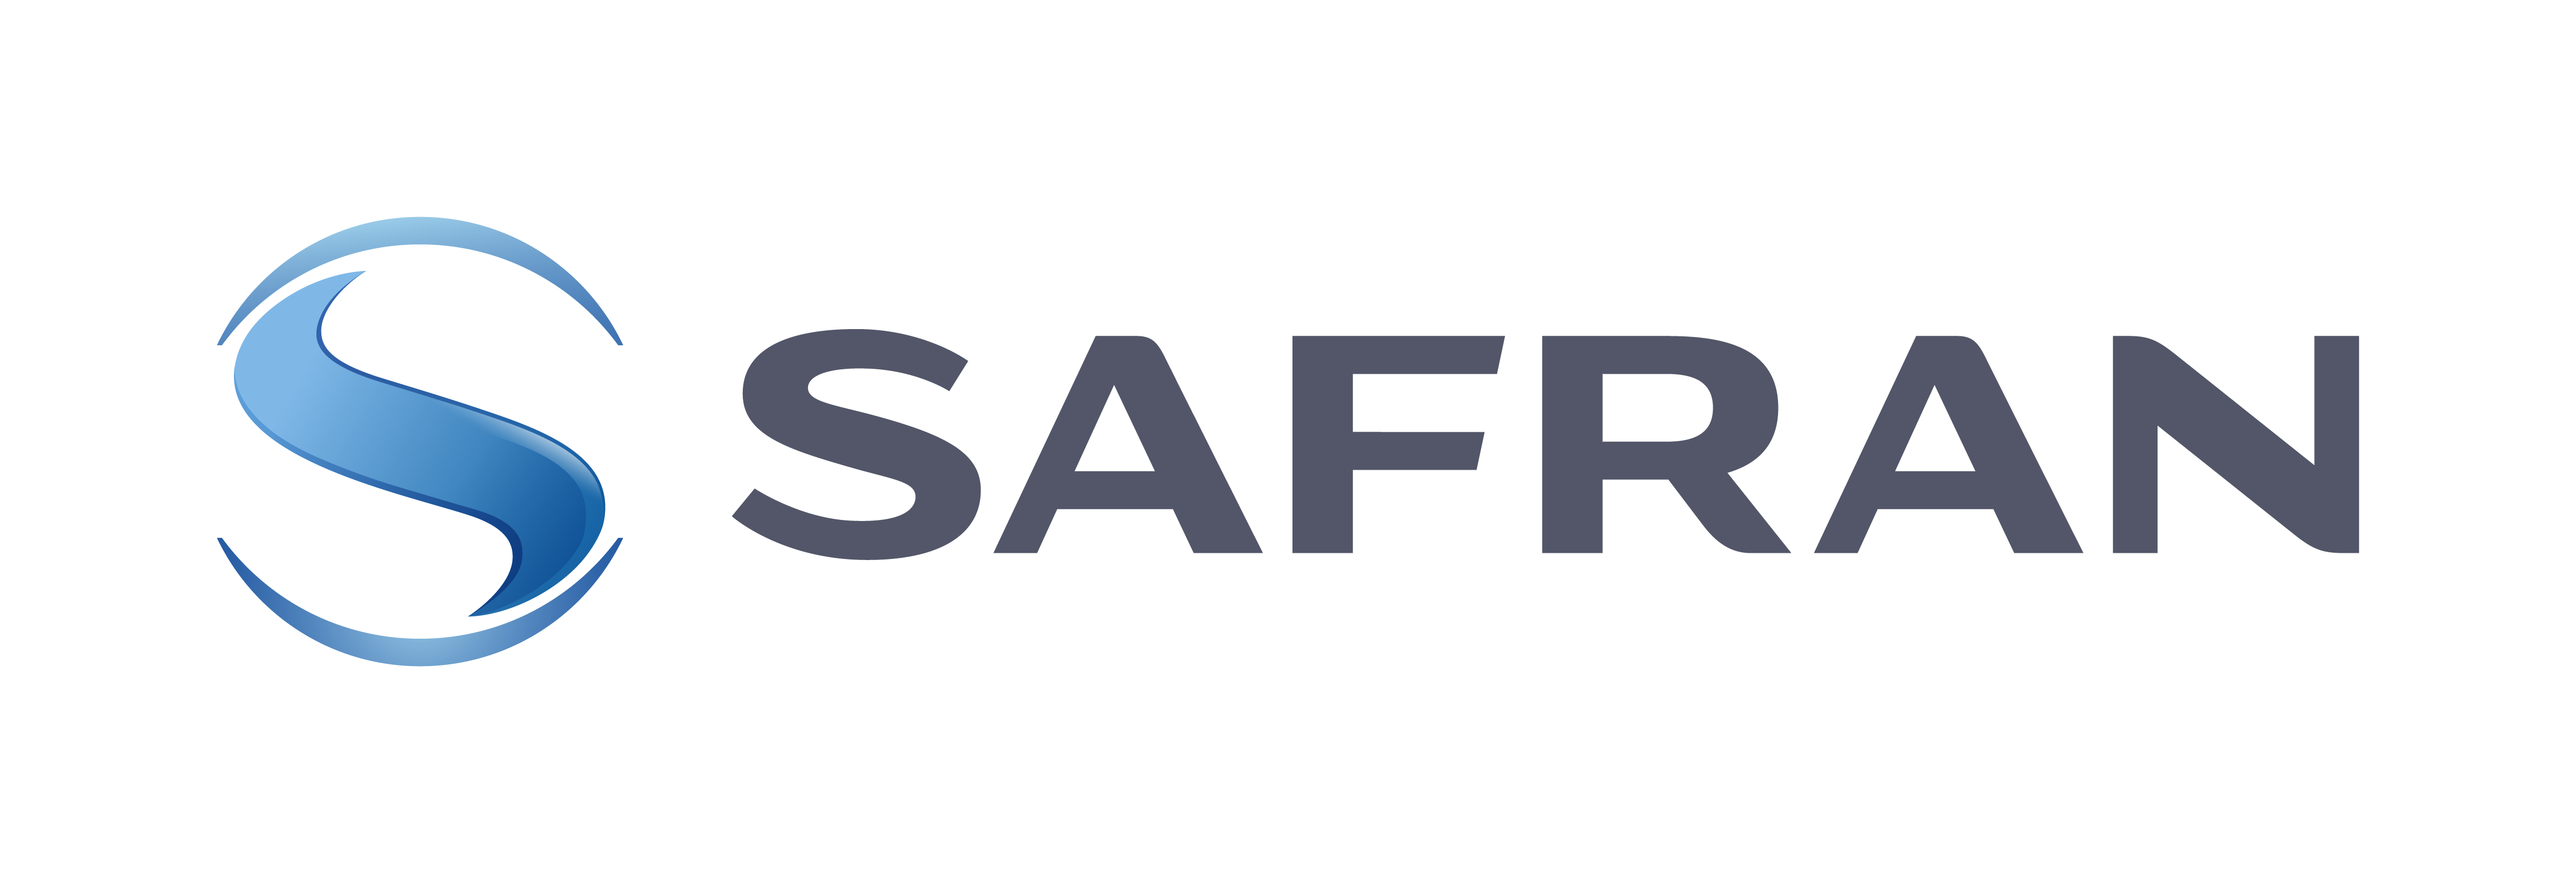 Safran Brand Logo